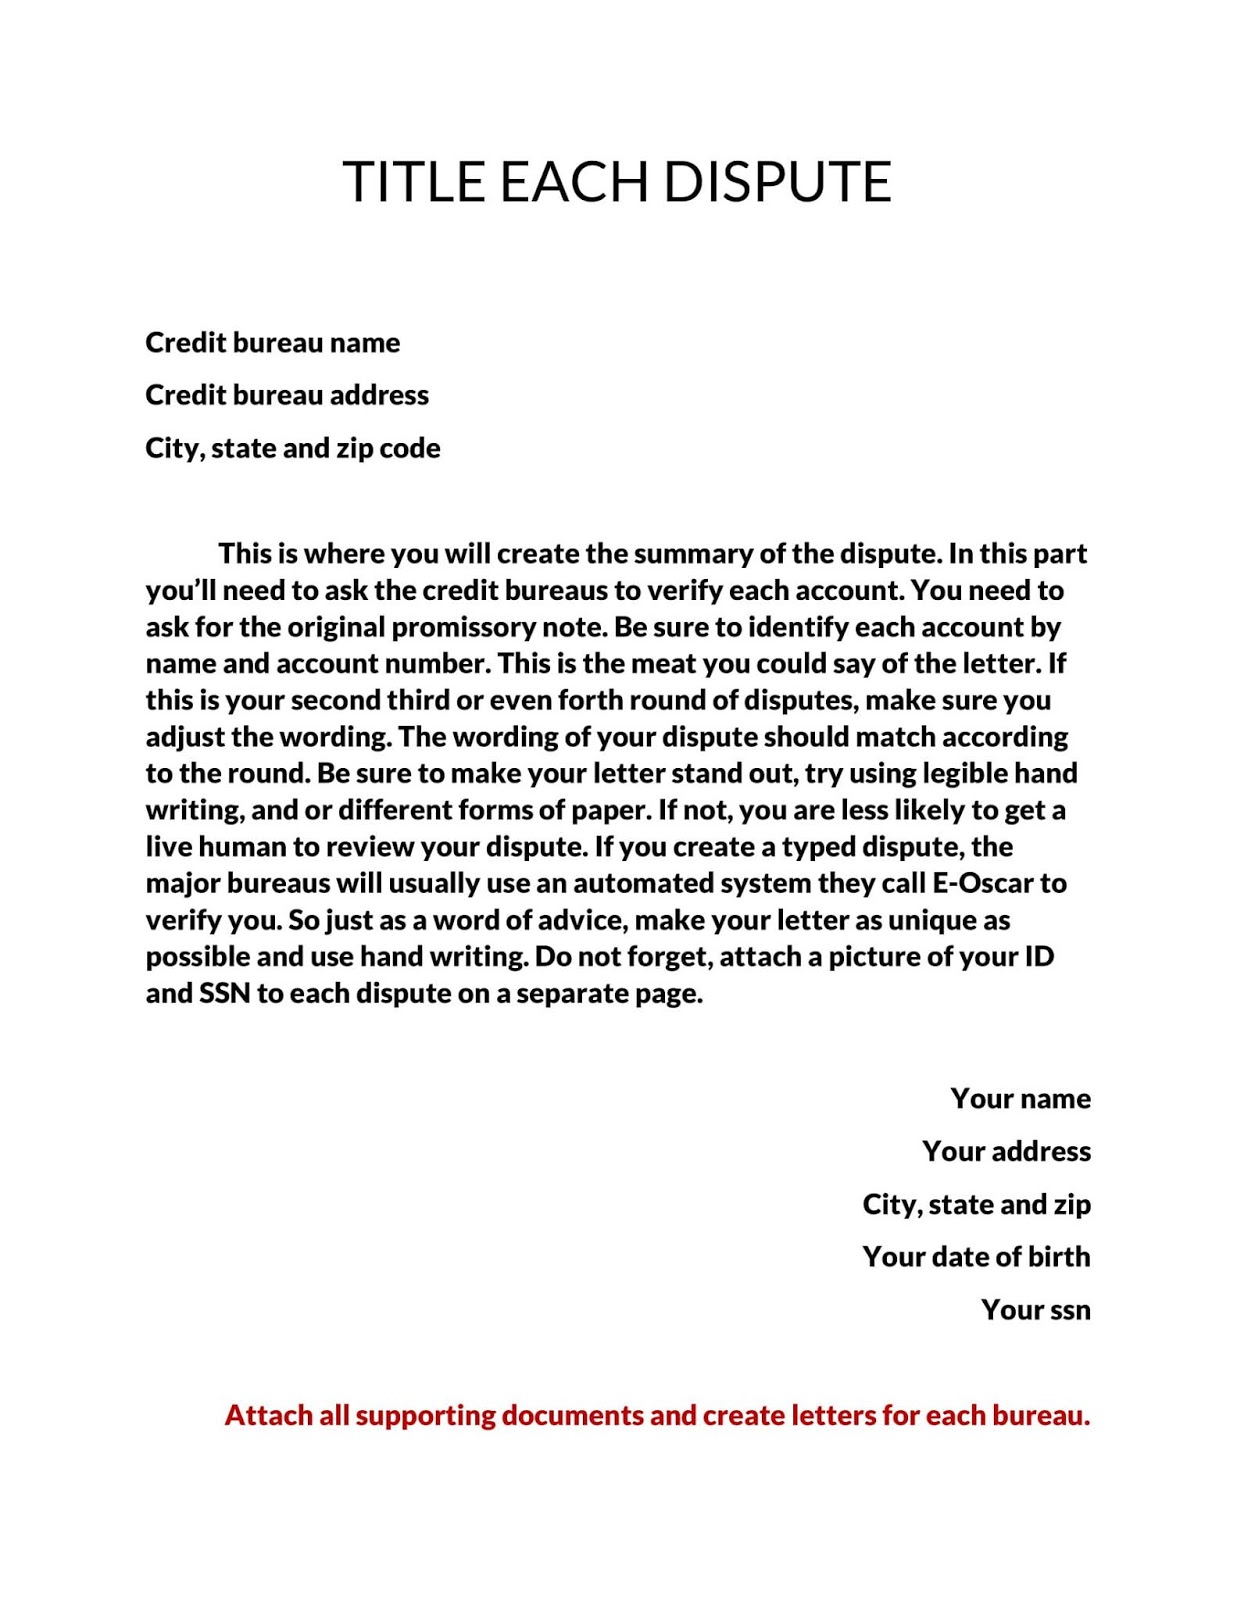 609-dispute-letter-to-credit-bureau-template-letter-format